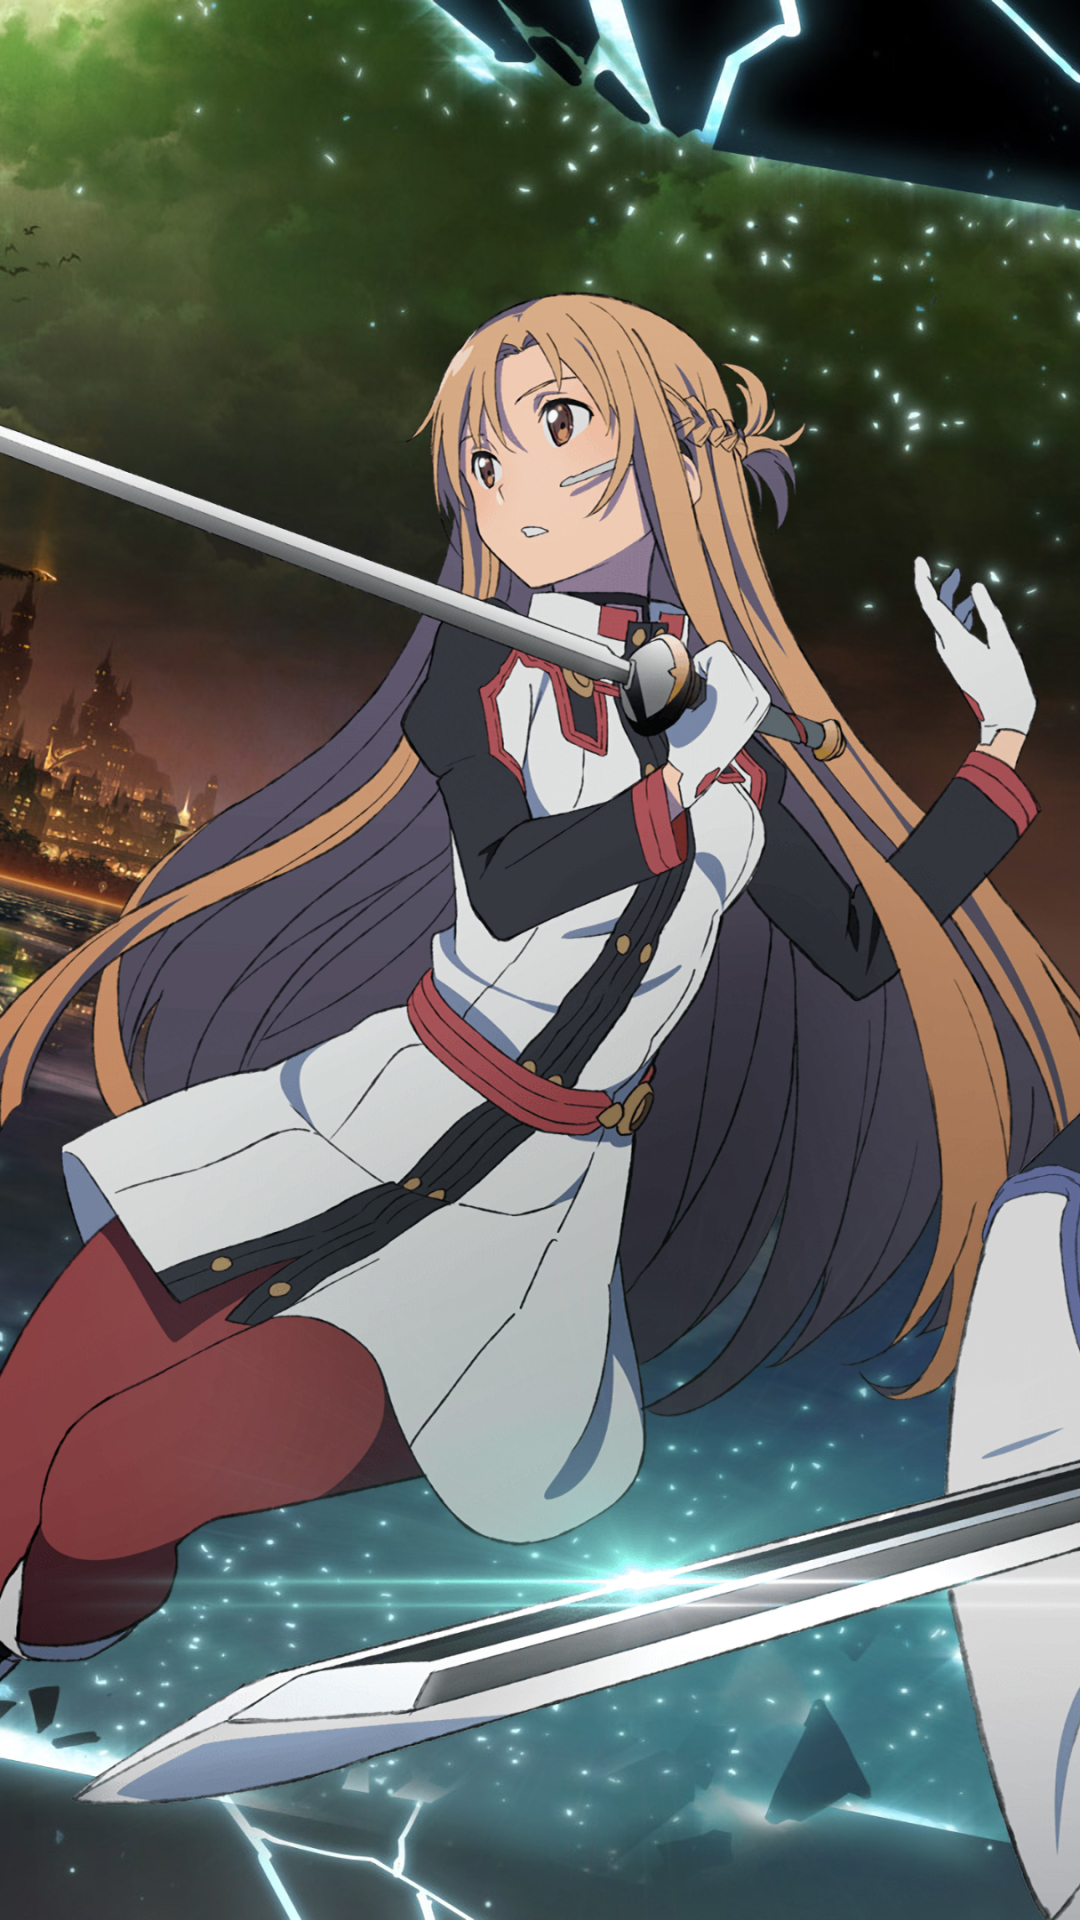 Baixar papel de parede para celular de Anime, Sword Art Online, Asuna Yuuki, Kazuto Kirigaya, Escala Ordinal Online Sword Art, Sword Art Online Filme: Escala Ordinal gratuito.